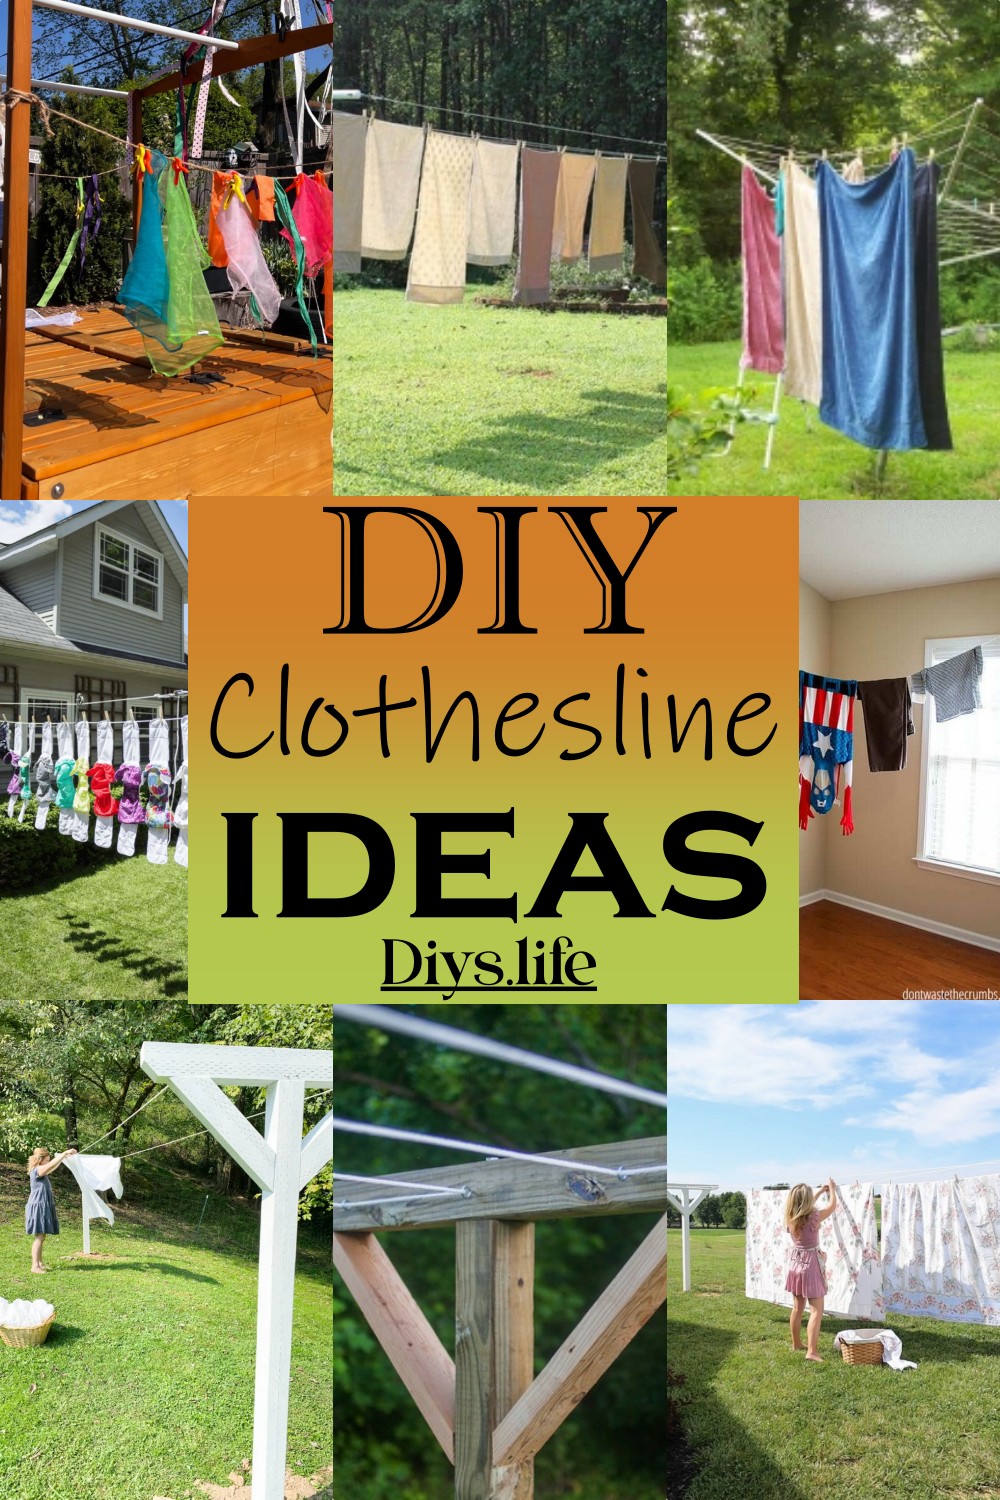 DIY Clothesline Ideas